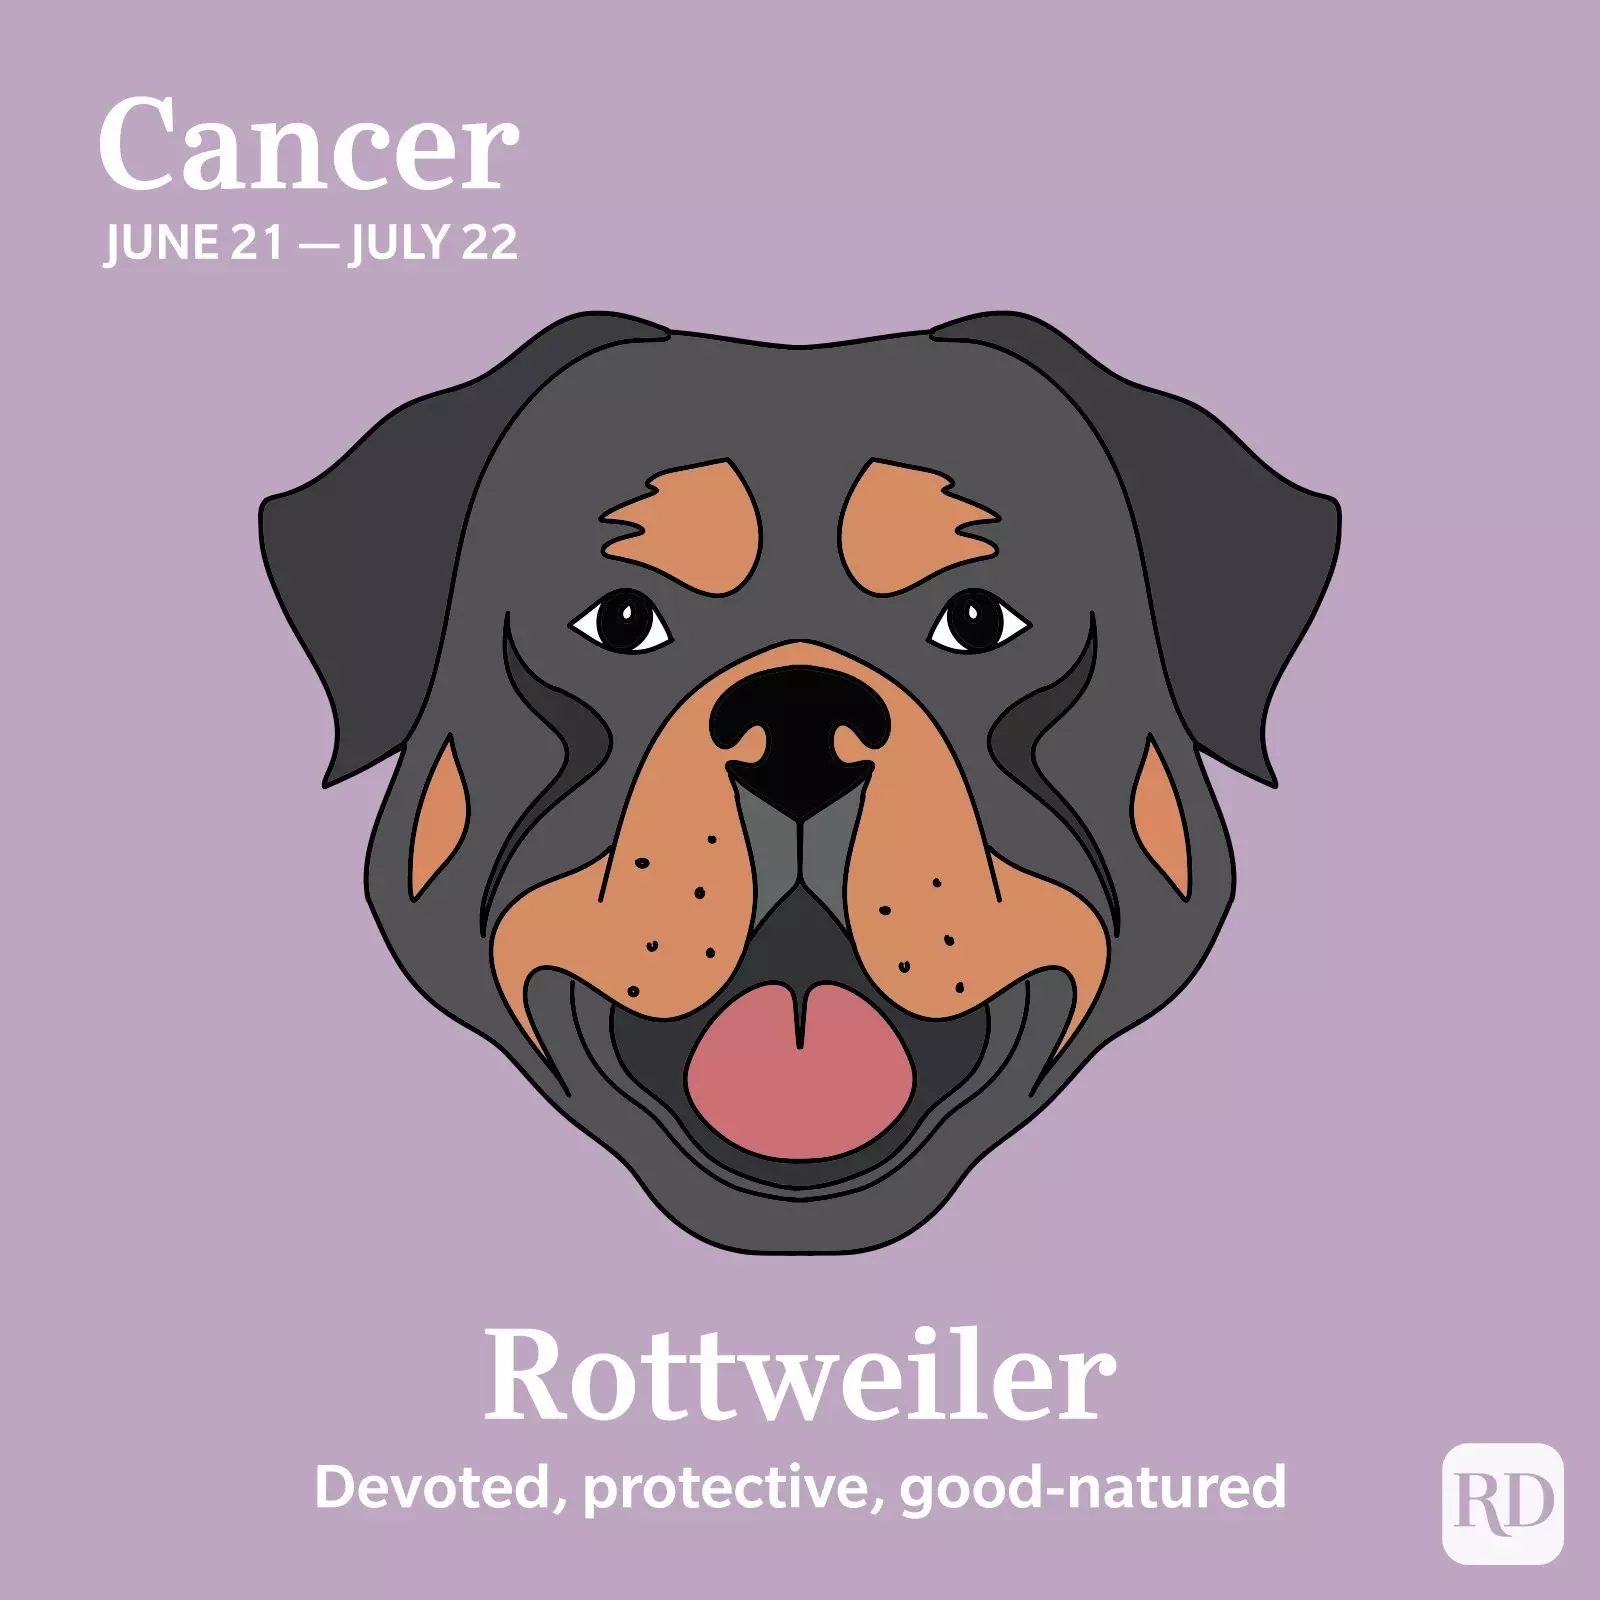 Cancer: Rottweiler